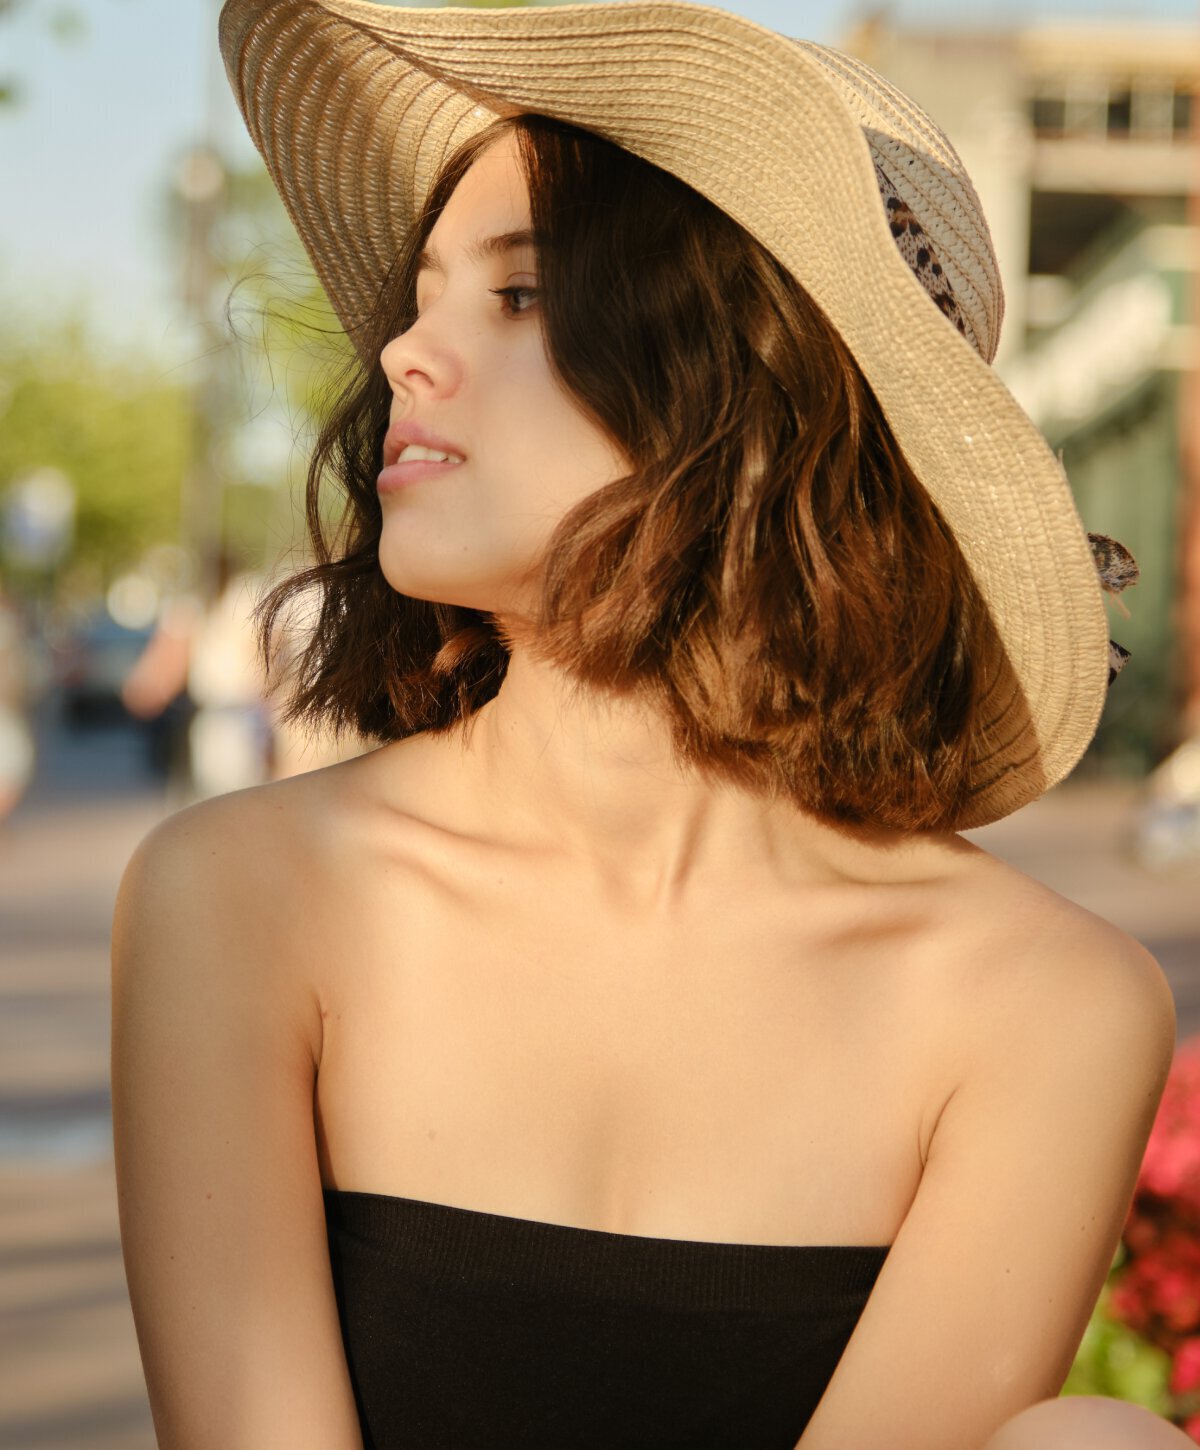 Vienna lumecca ipl model with tan hat